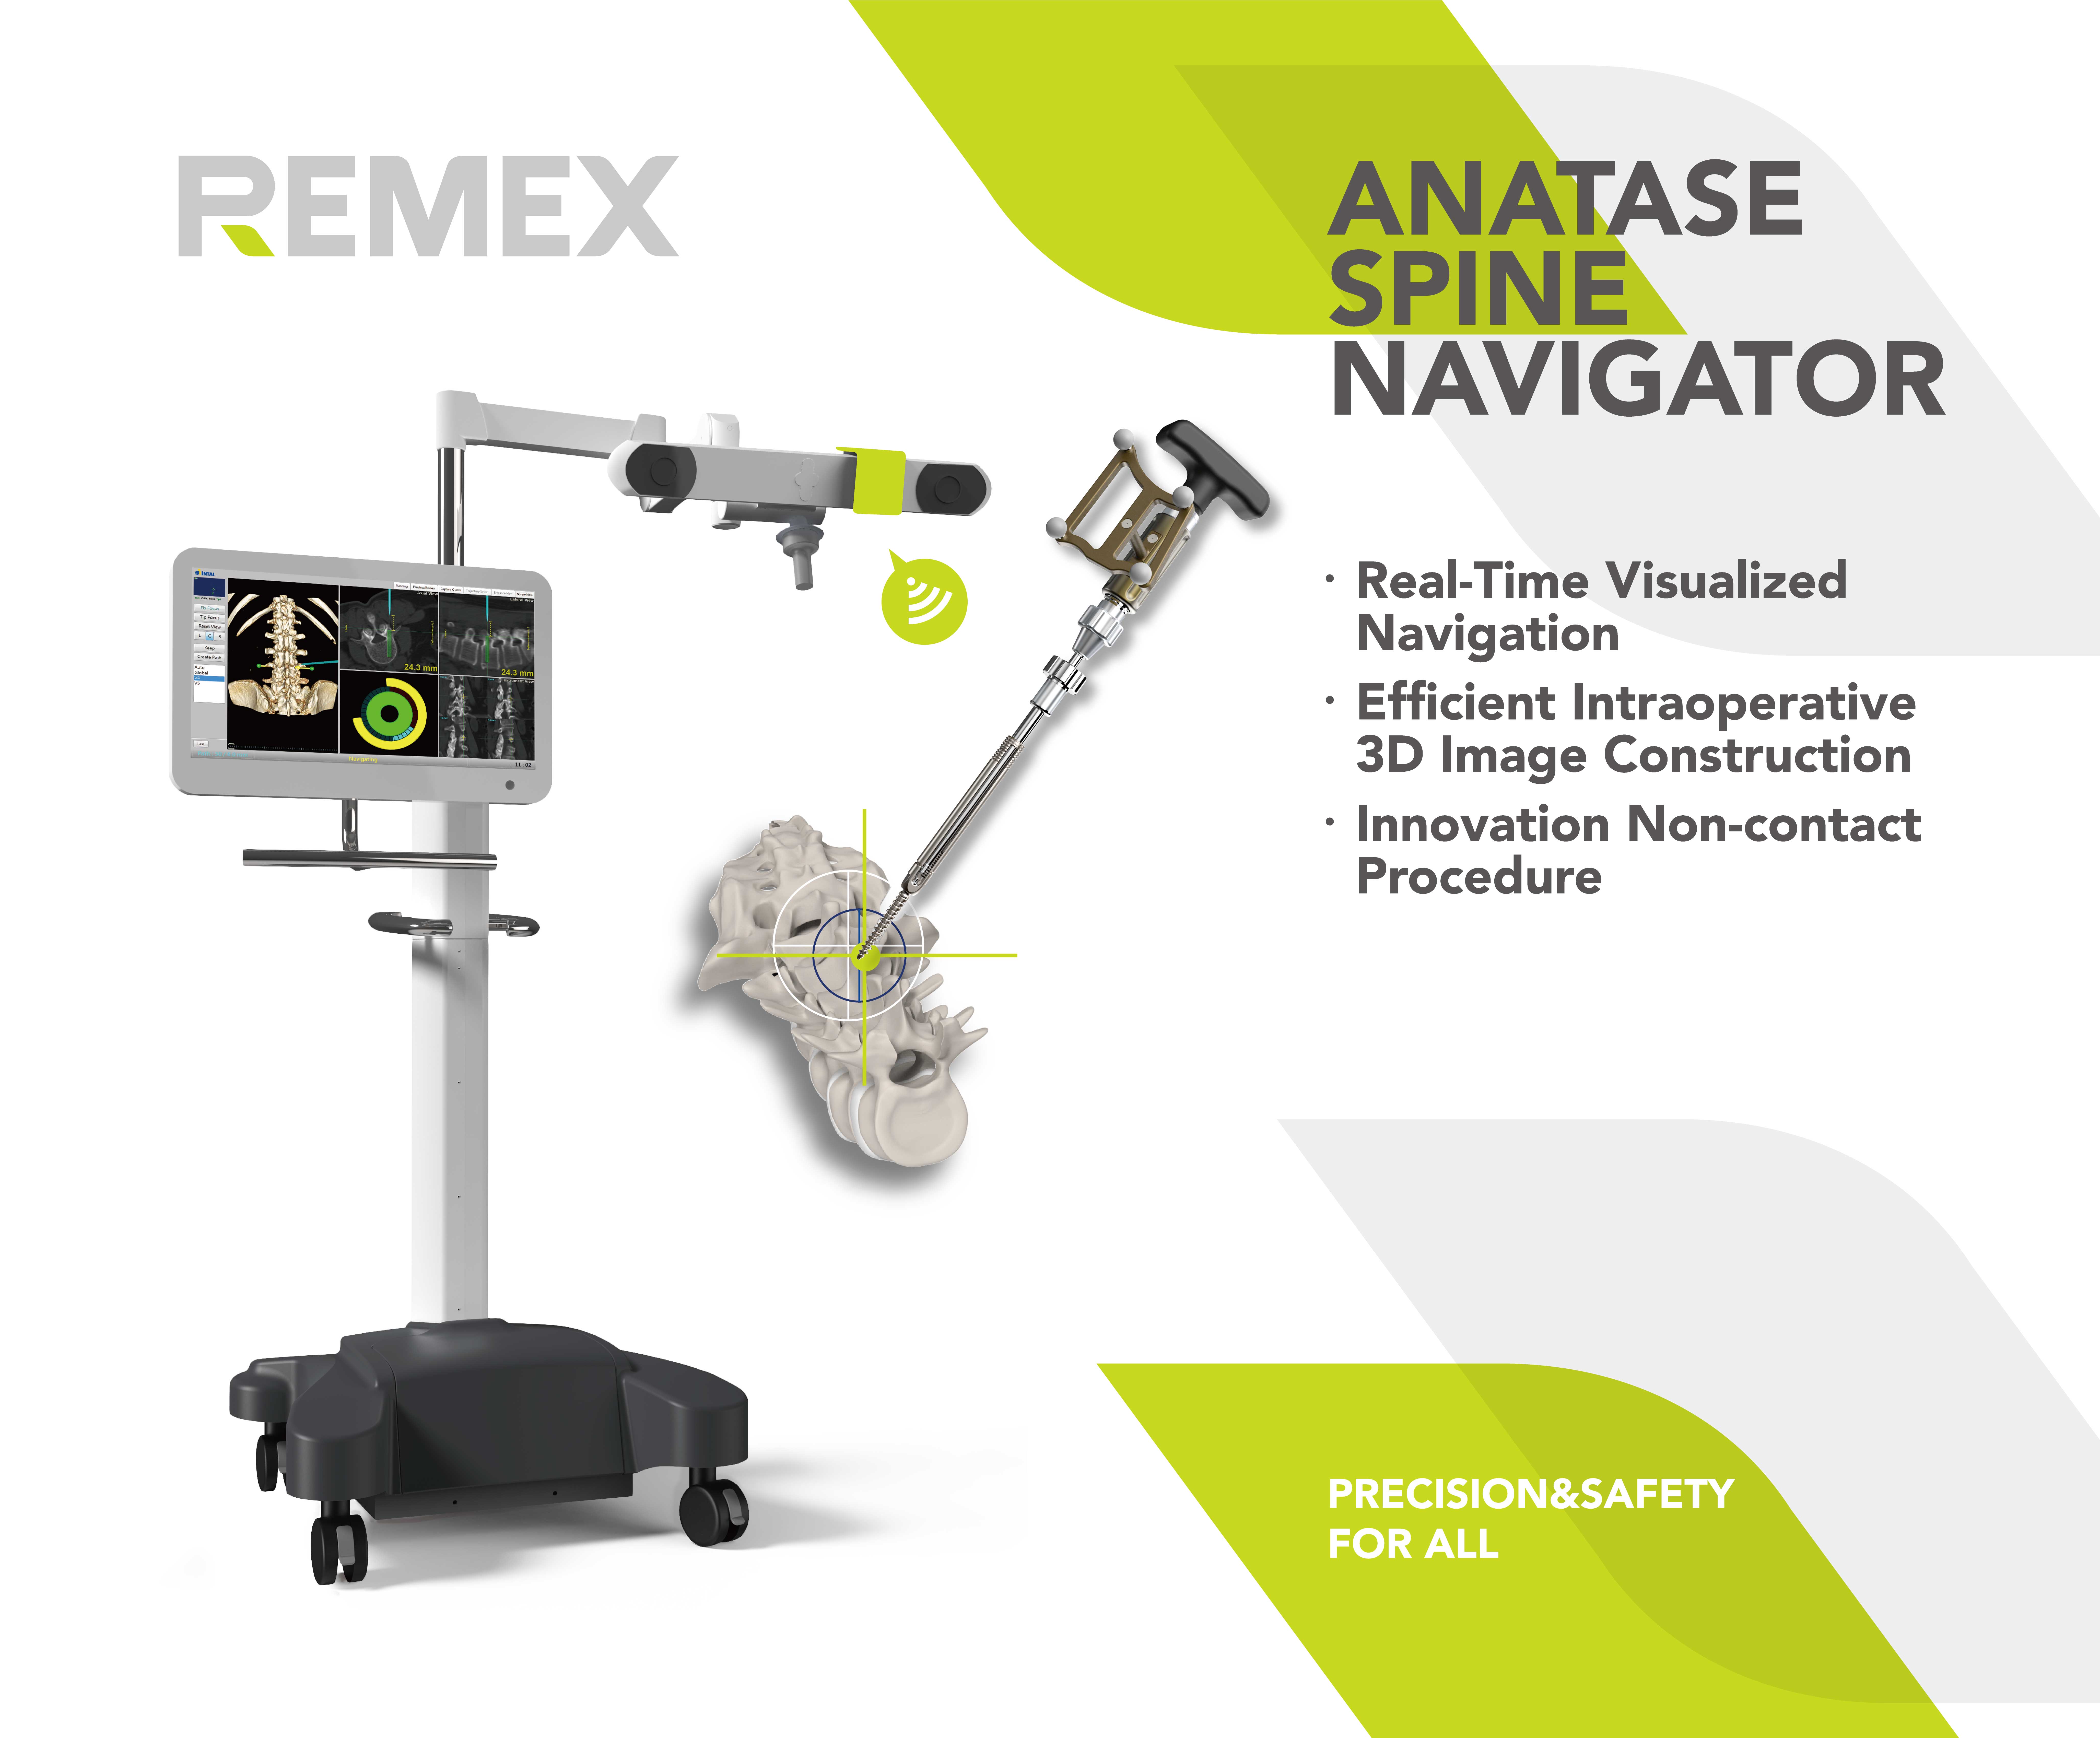 Remex-Anatase-Spine-Navigator-back-wall-(3) - 佳芳.jpg